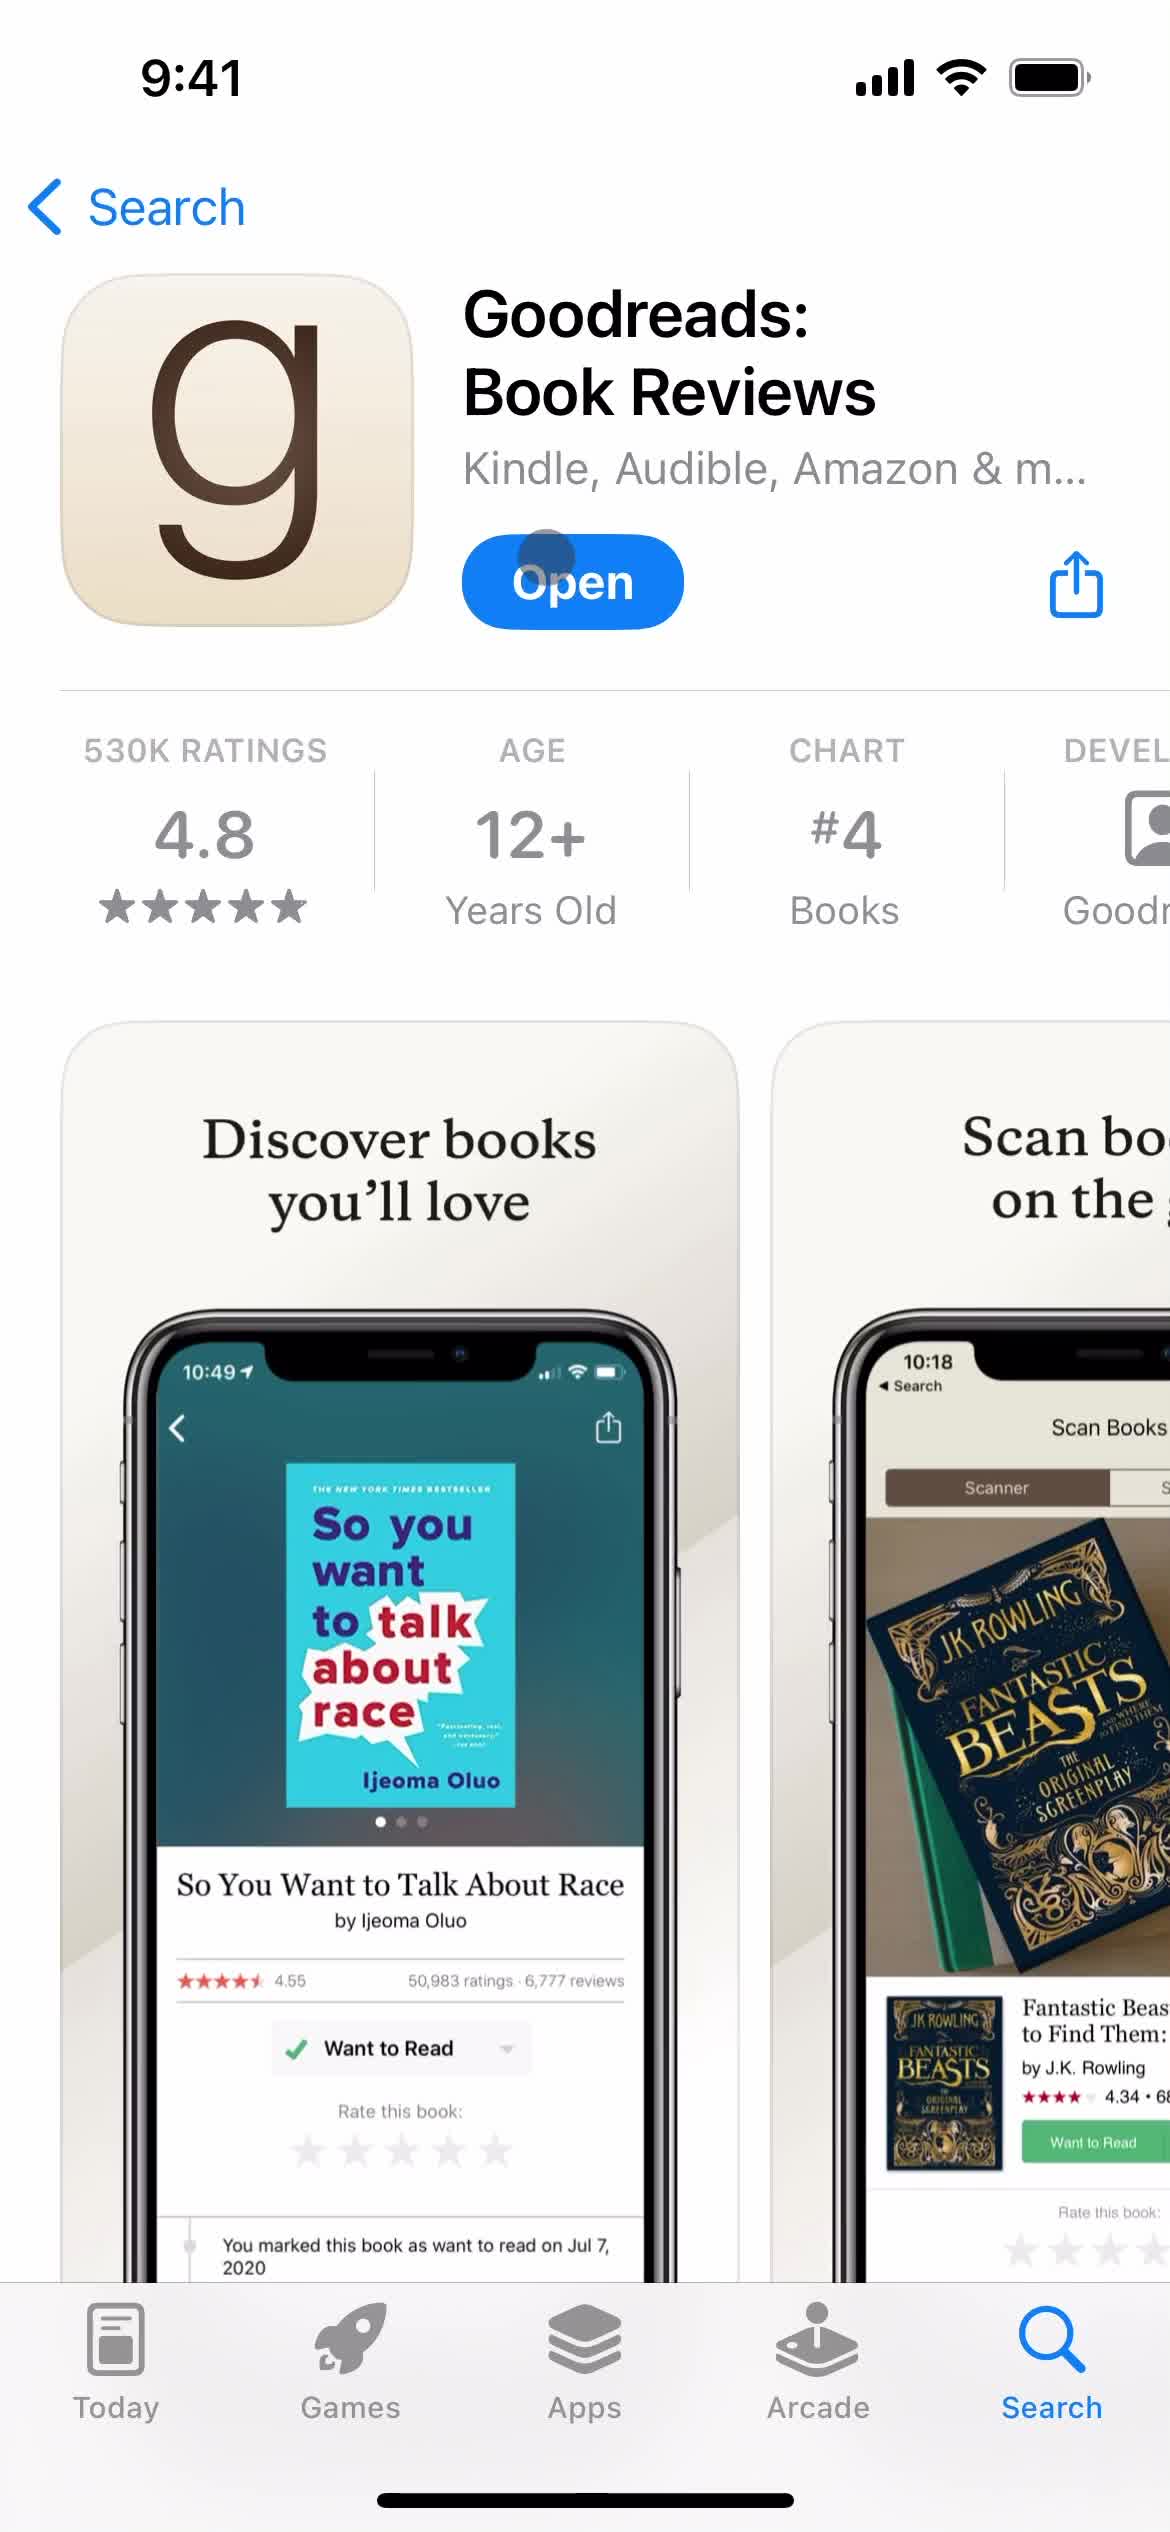 Goodreads app store listing screenshot